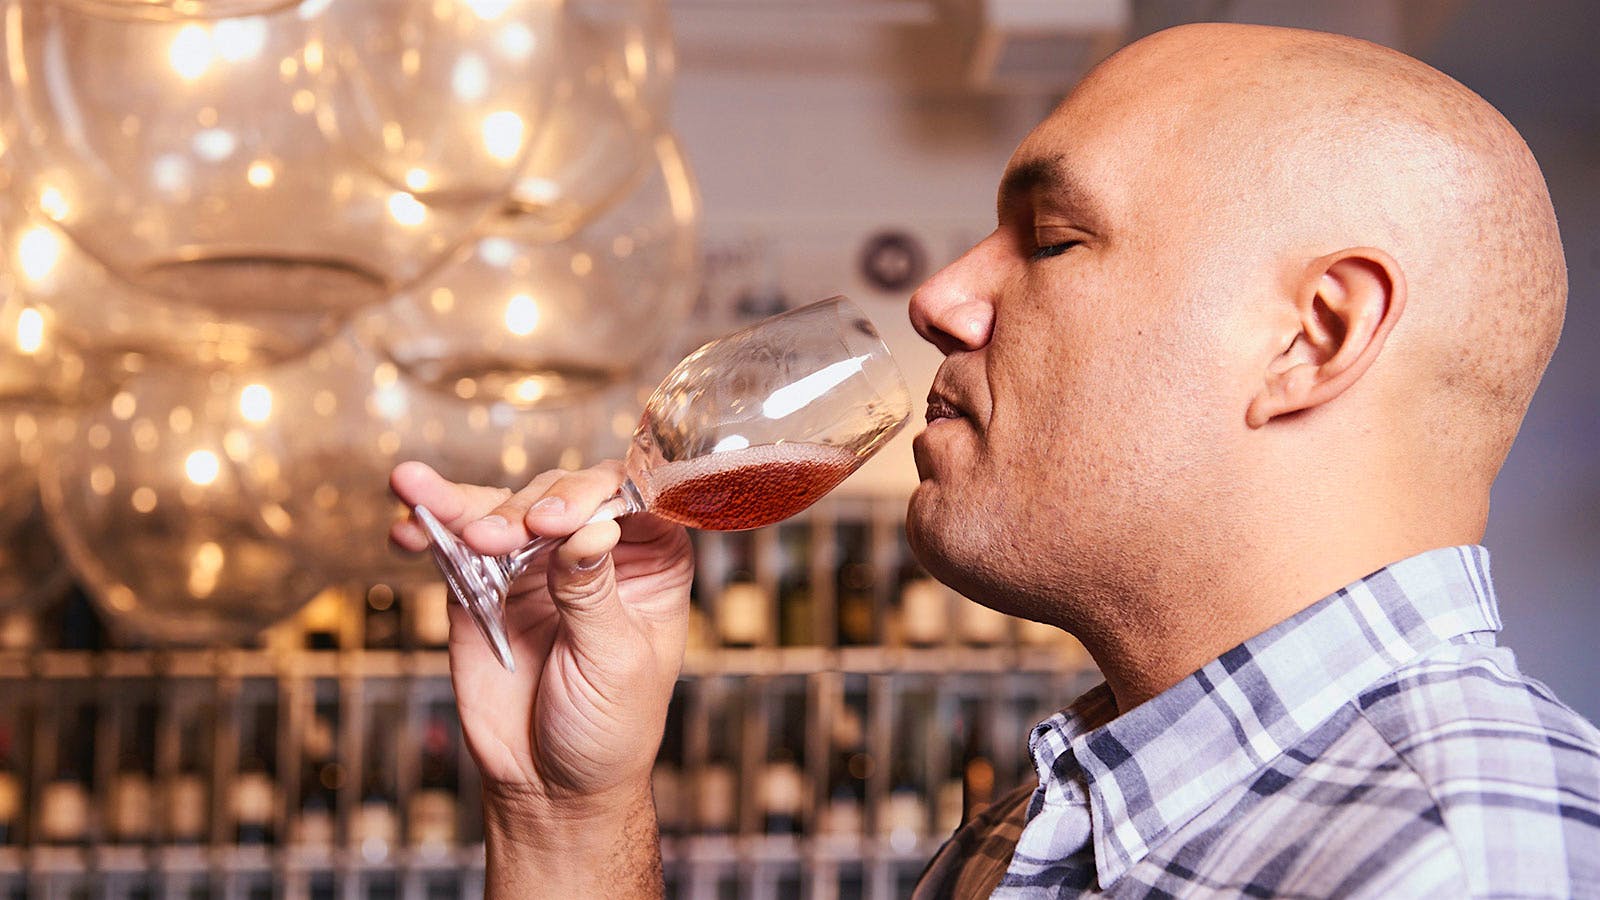 Bringing Hospitality to Wine Retail: TJ Douglas of Urban Grape